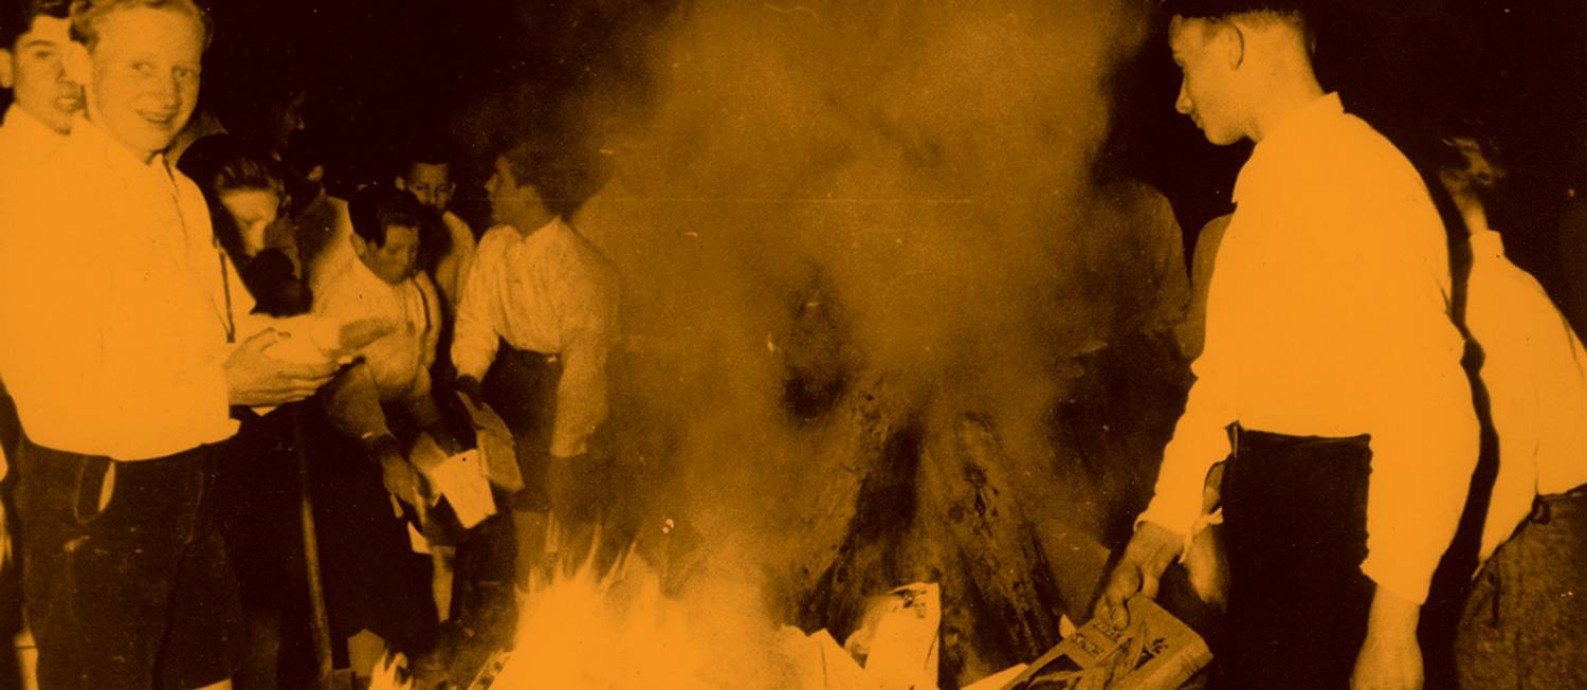 Membros da juventude hitlerista queimam livros, 1938 Foto: Photo 12 / Agência O Globo